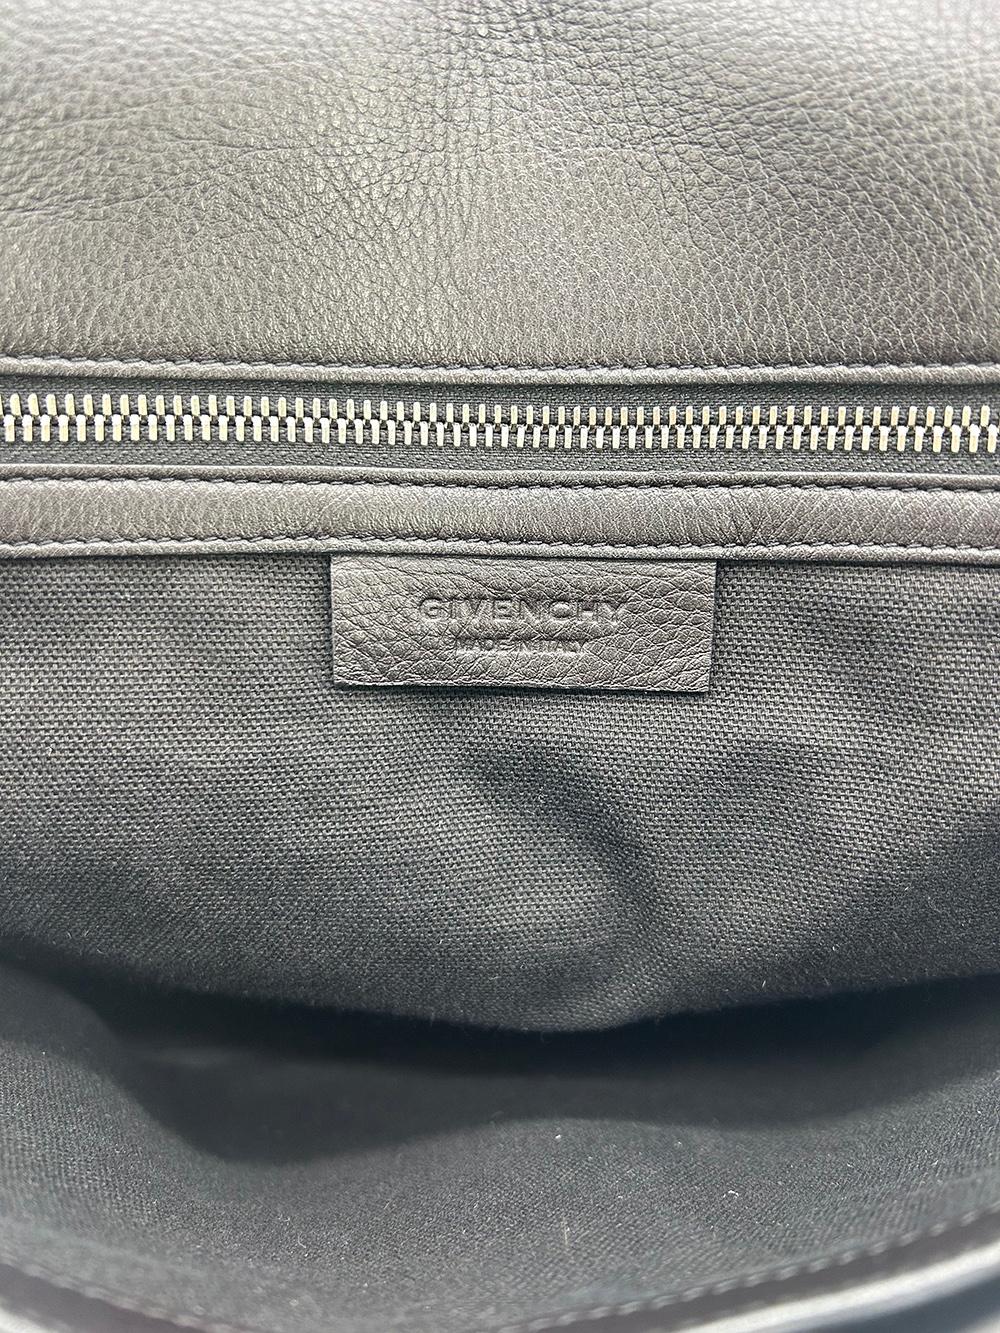 Givenchy Black Leather Pandora Pure Flap Bag For Sale 9